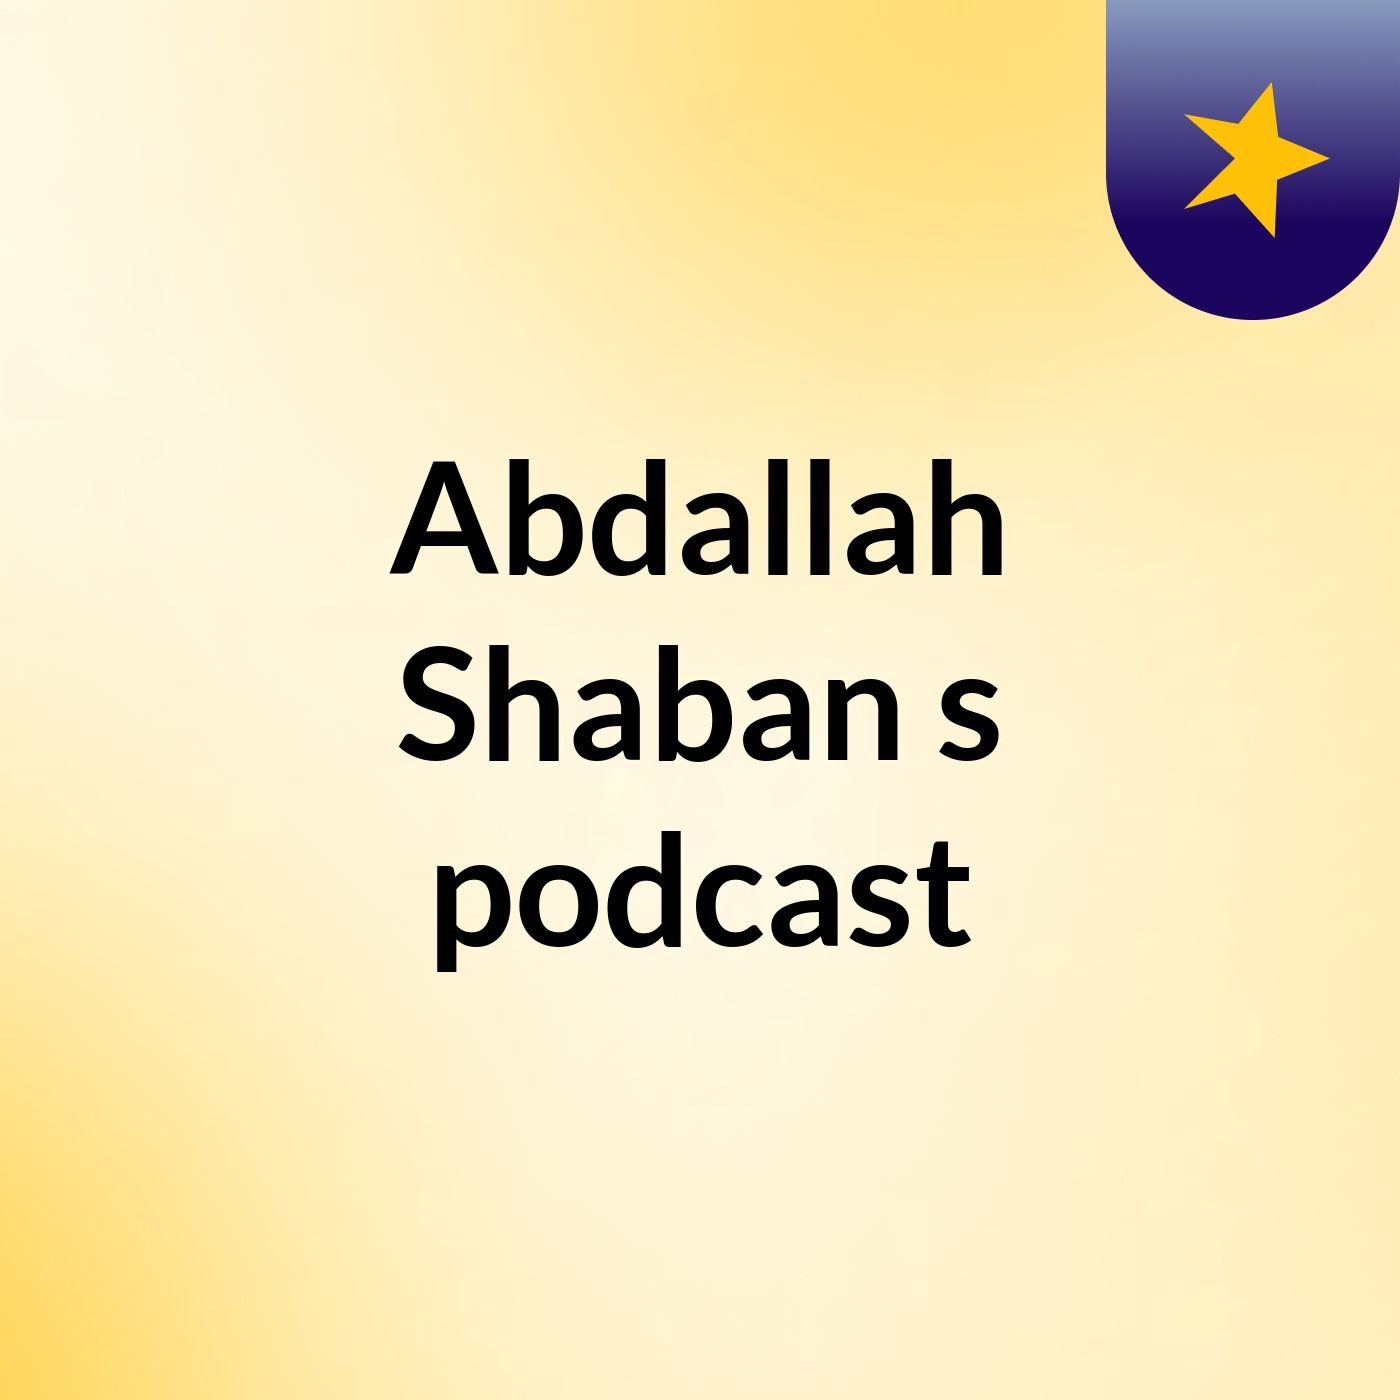 Episode 2 - Abdallah Shaban's podcast